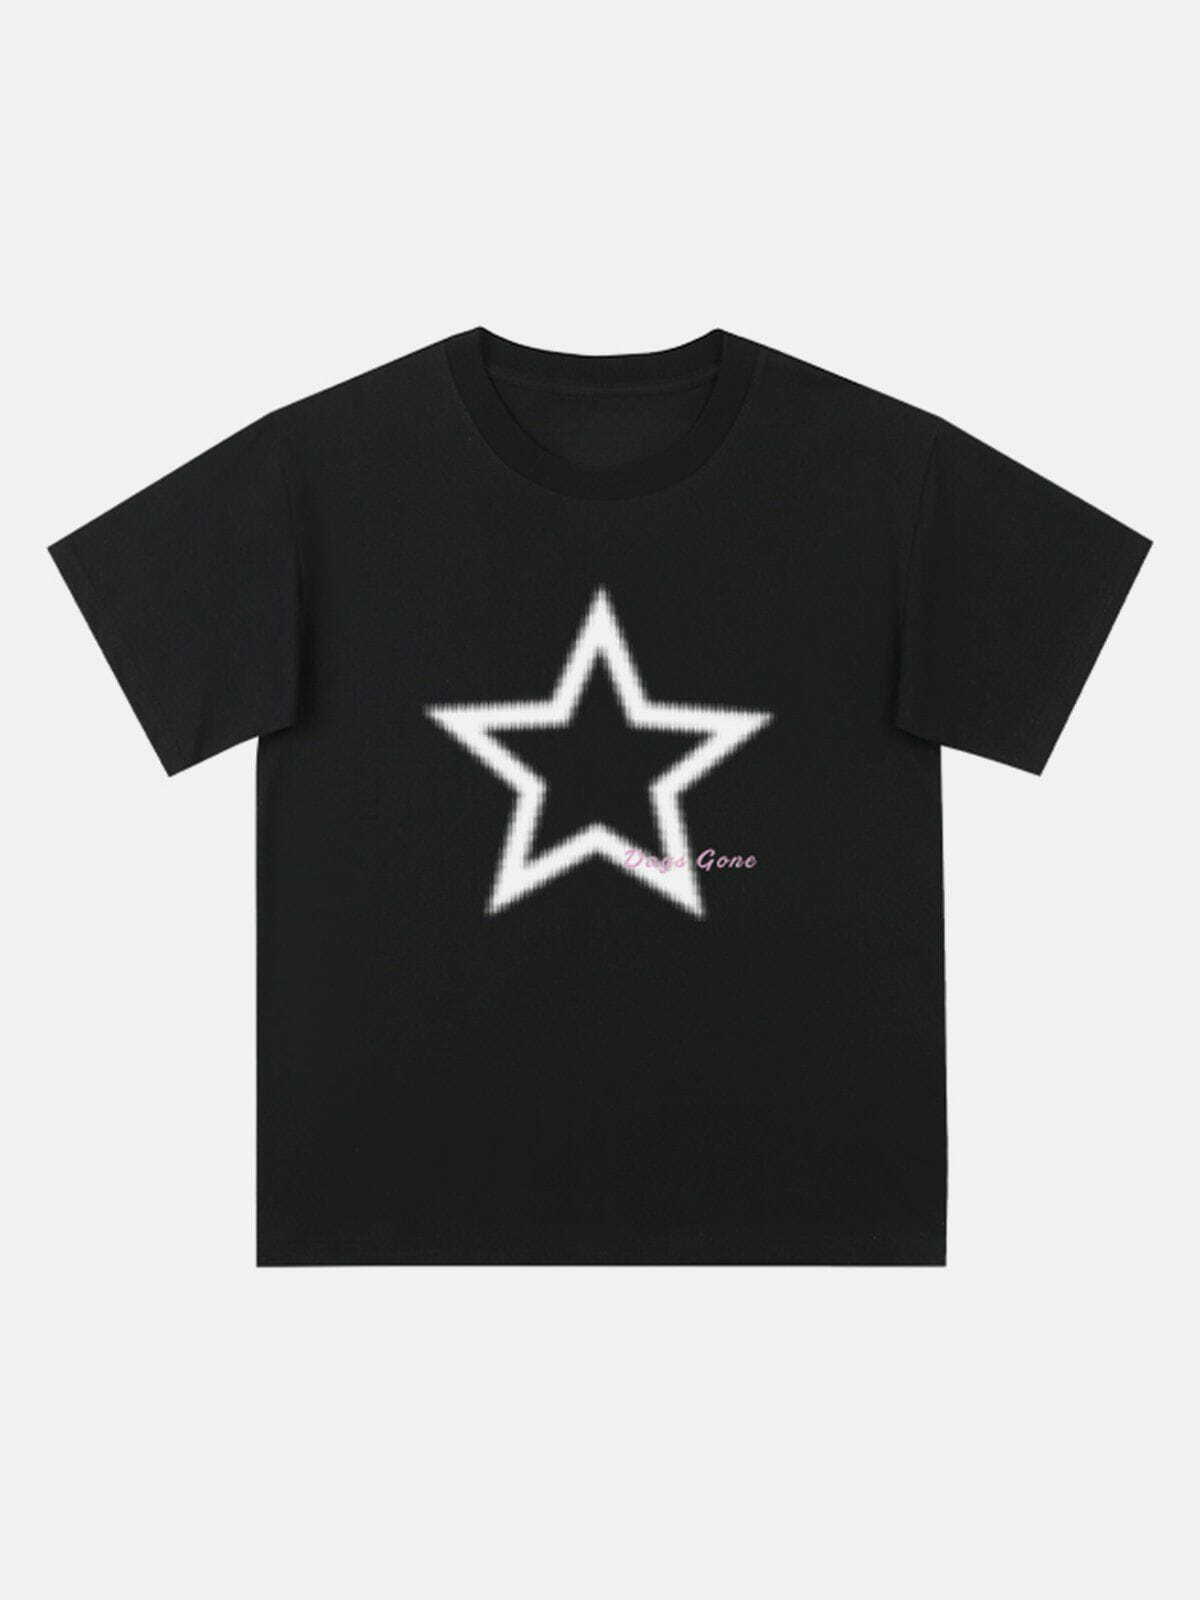 playful star print tee edgy  retro shirt for youthful streetwear 5289